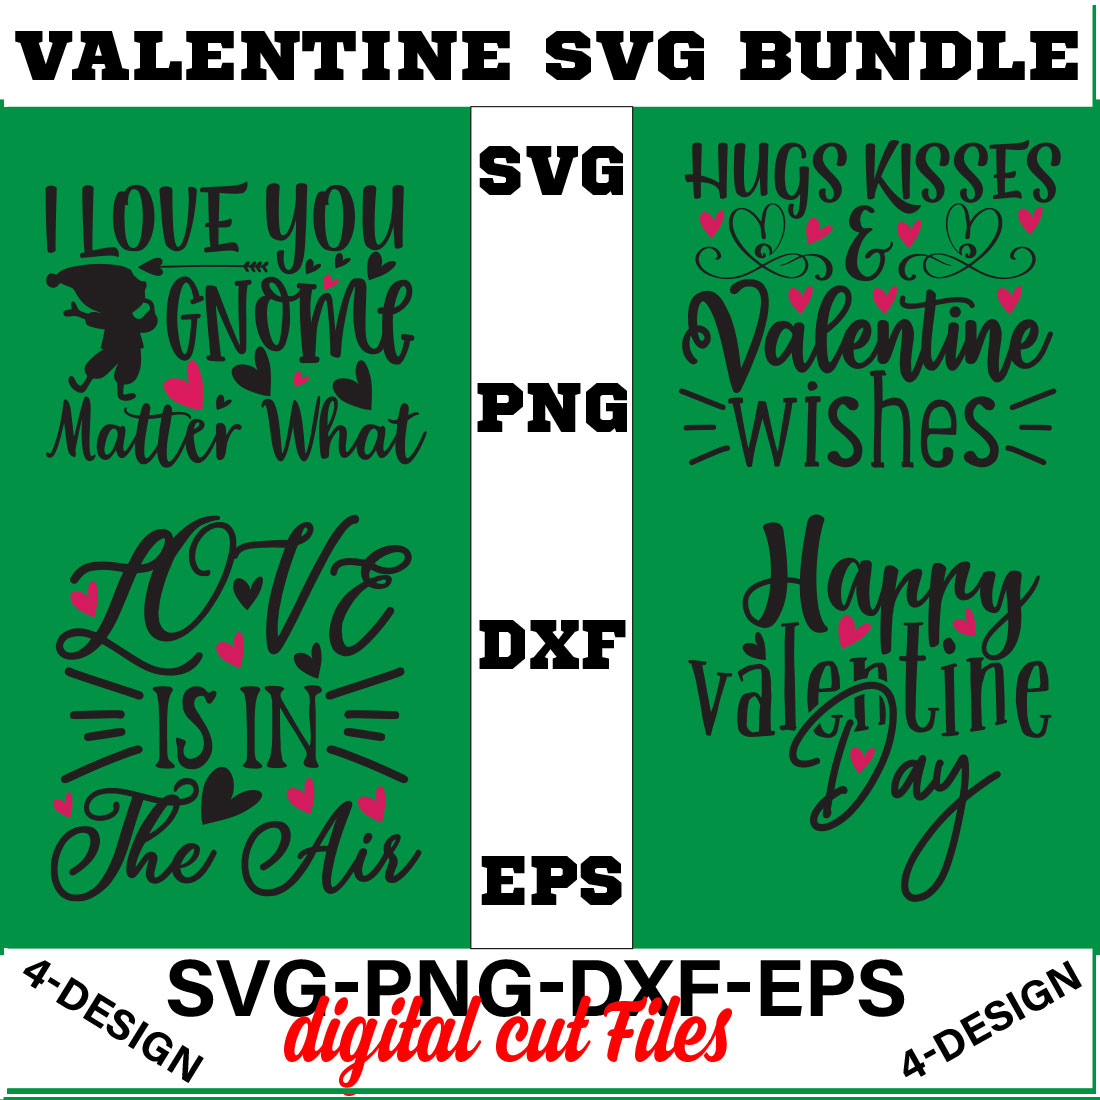 Valentines SVG Bundle, Valentine's Baby Shirts svg, Valentine Shirts svg, Cute Valentines svg, Heart Shirt svg, Love svg, Volume-04 cover image.